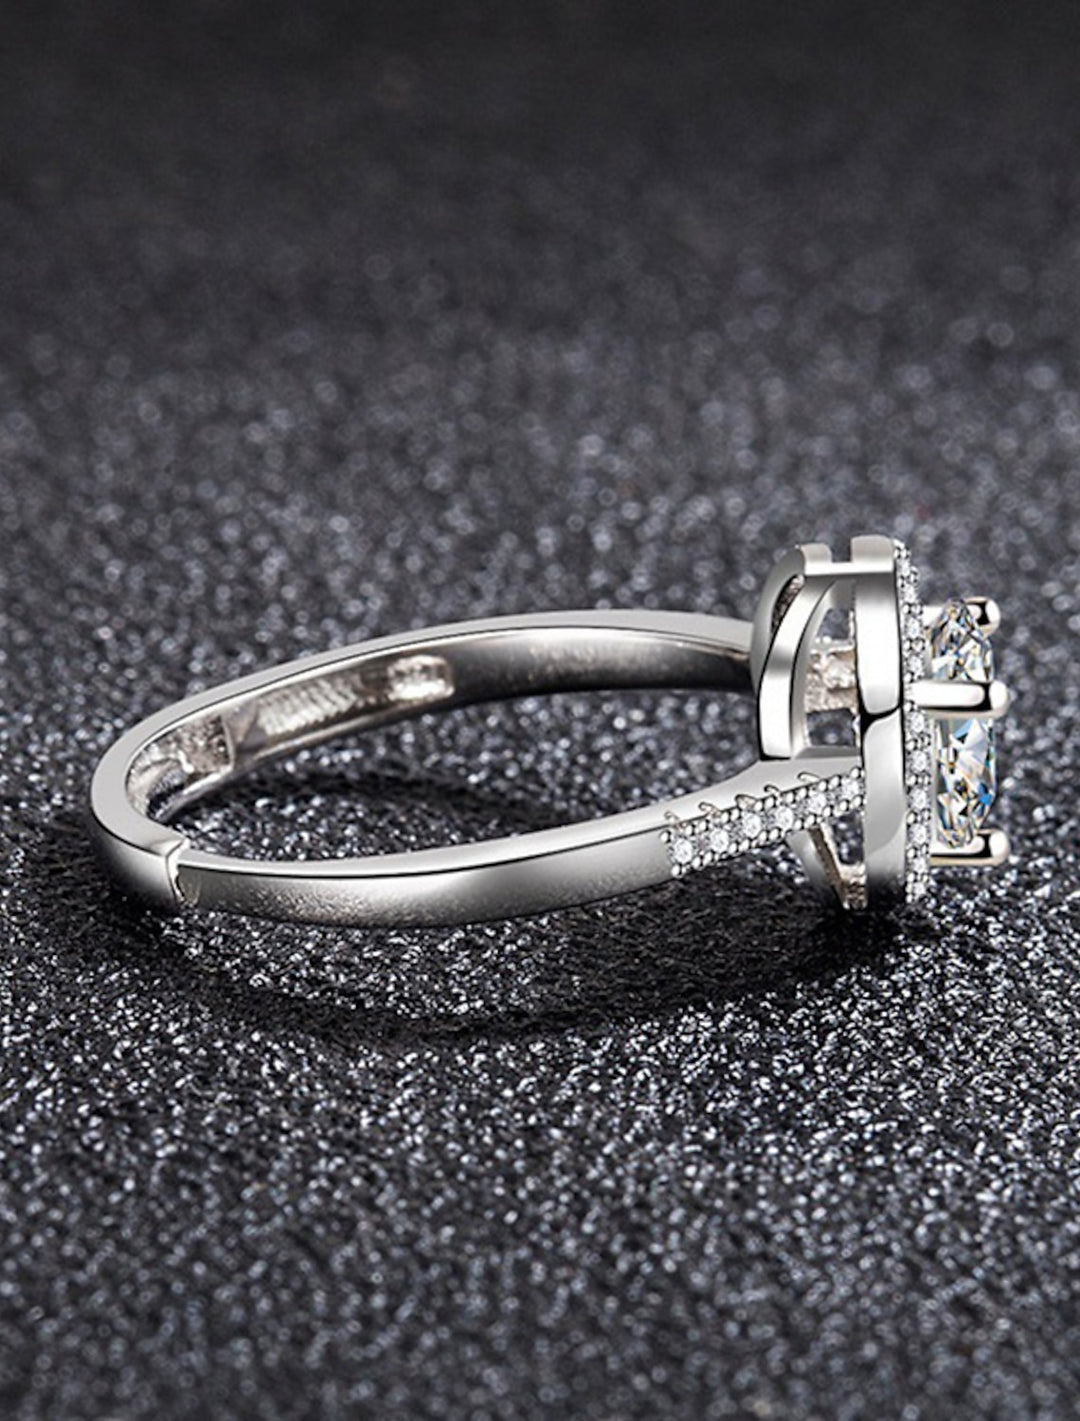 Ring Wedding Geometrical Silver Rhinestone S925 Sterling Silver Heart Stylish Simple Luxury / Adjustable Ring